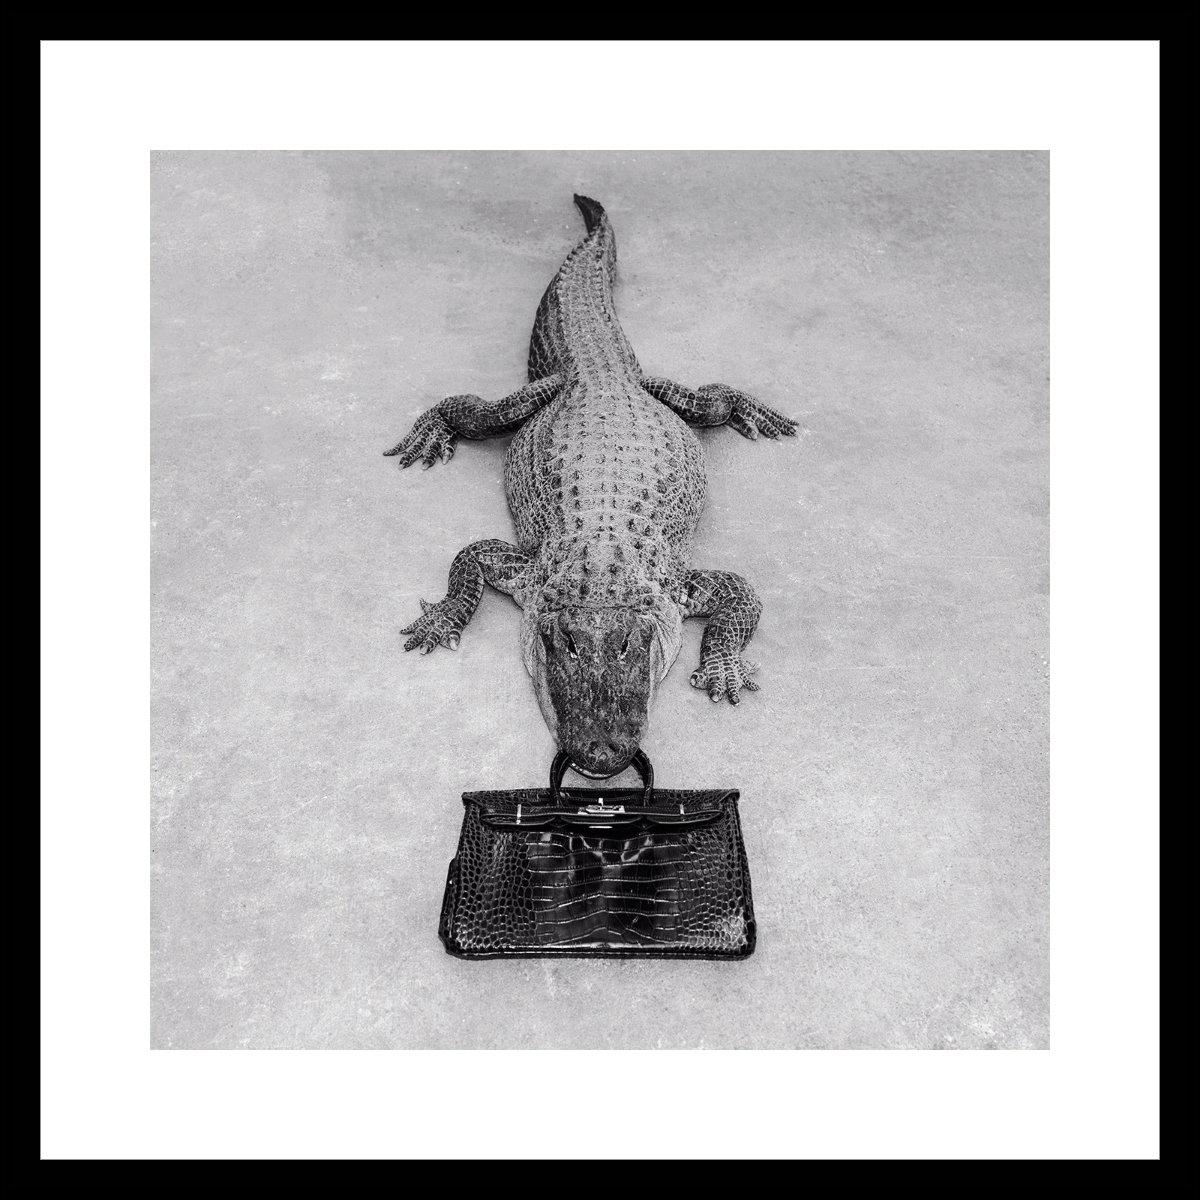 Tyler Shields - Gator Birkin Monochrome, Photography 2014, Printed After 1